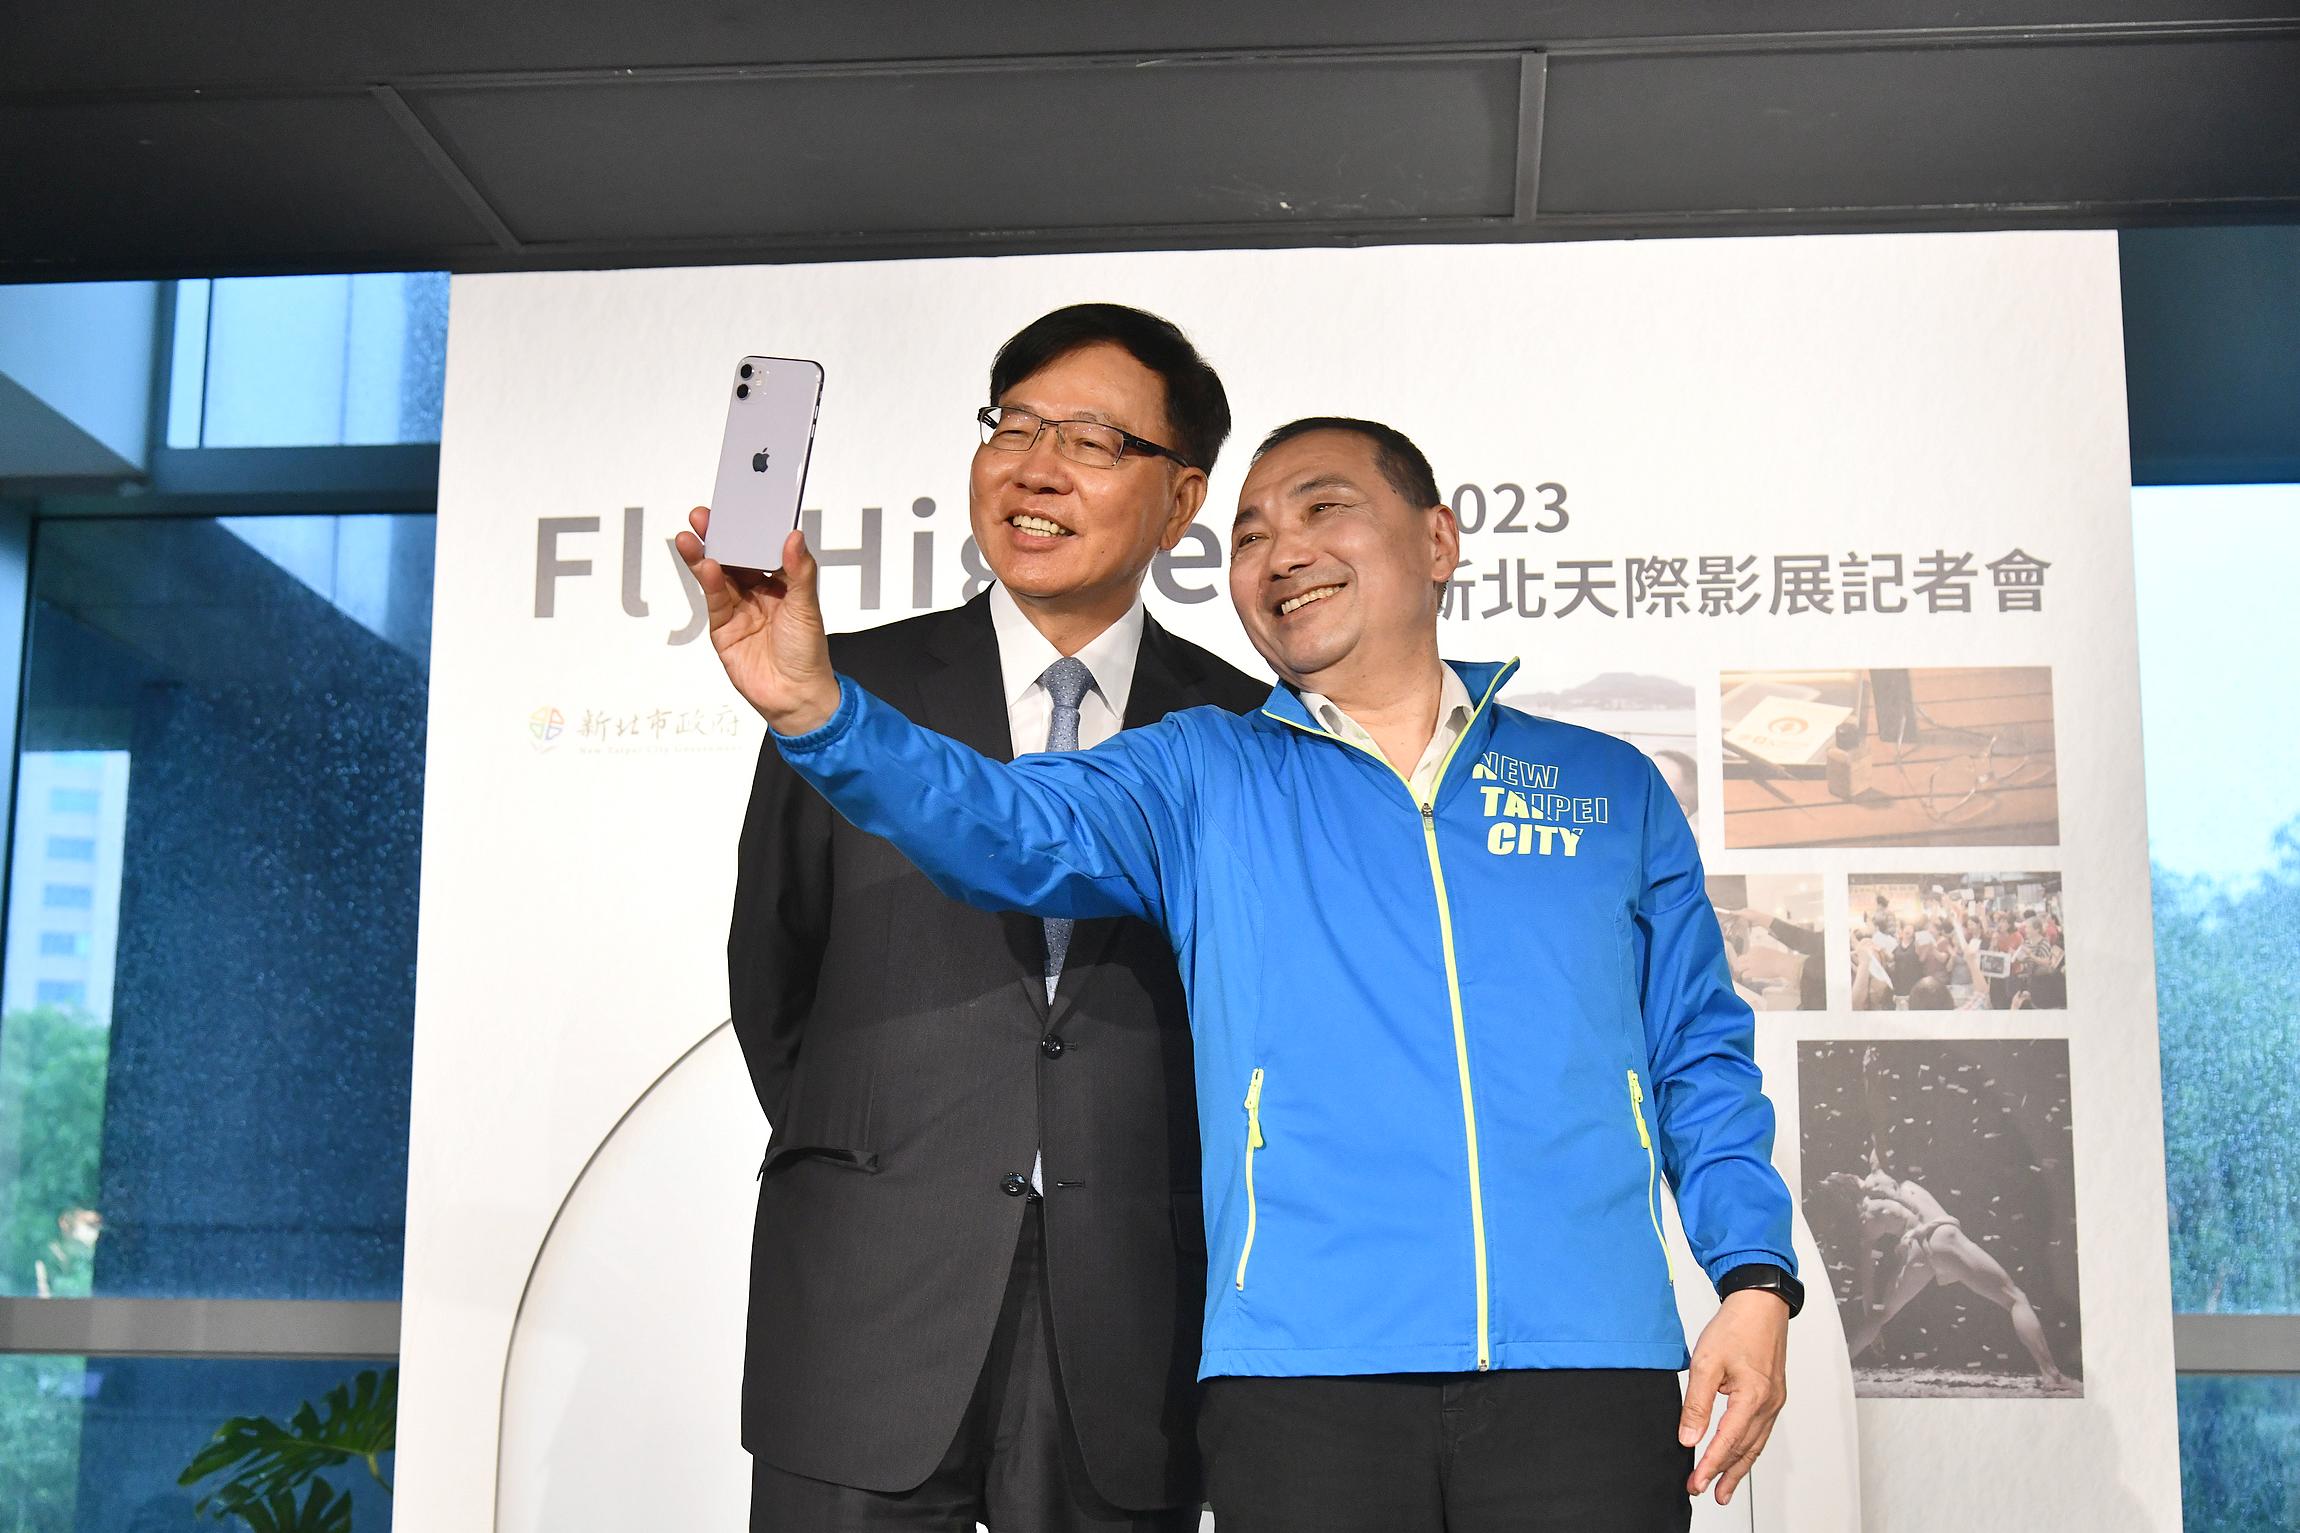 New Taipei City’s Mayor Hou You-yi and the chairman of Eva Air Lin Bao-shui 